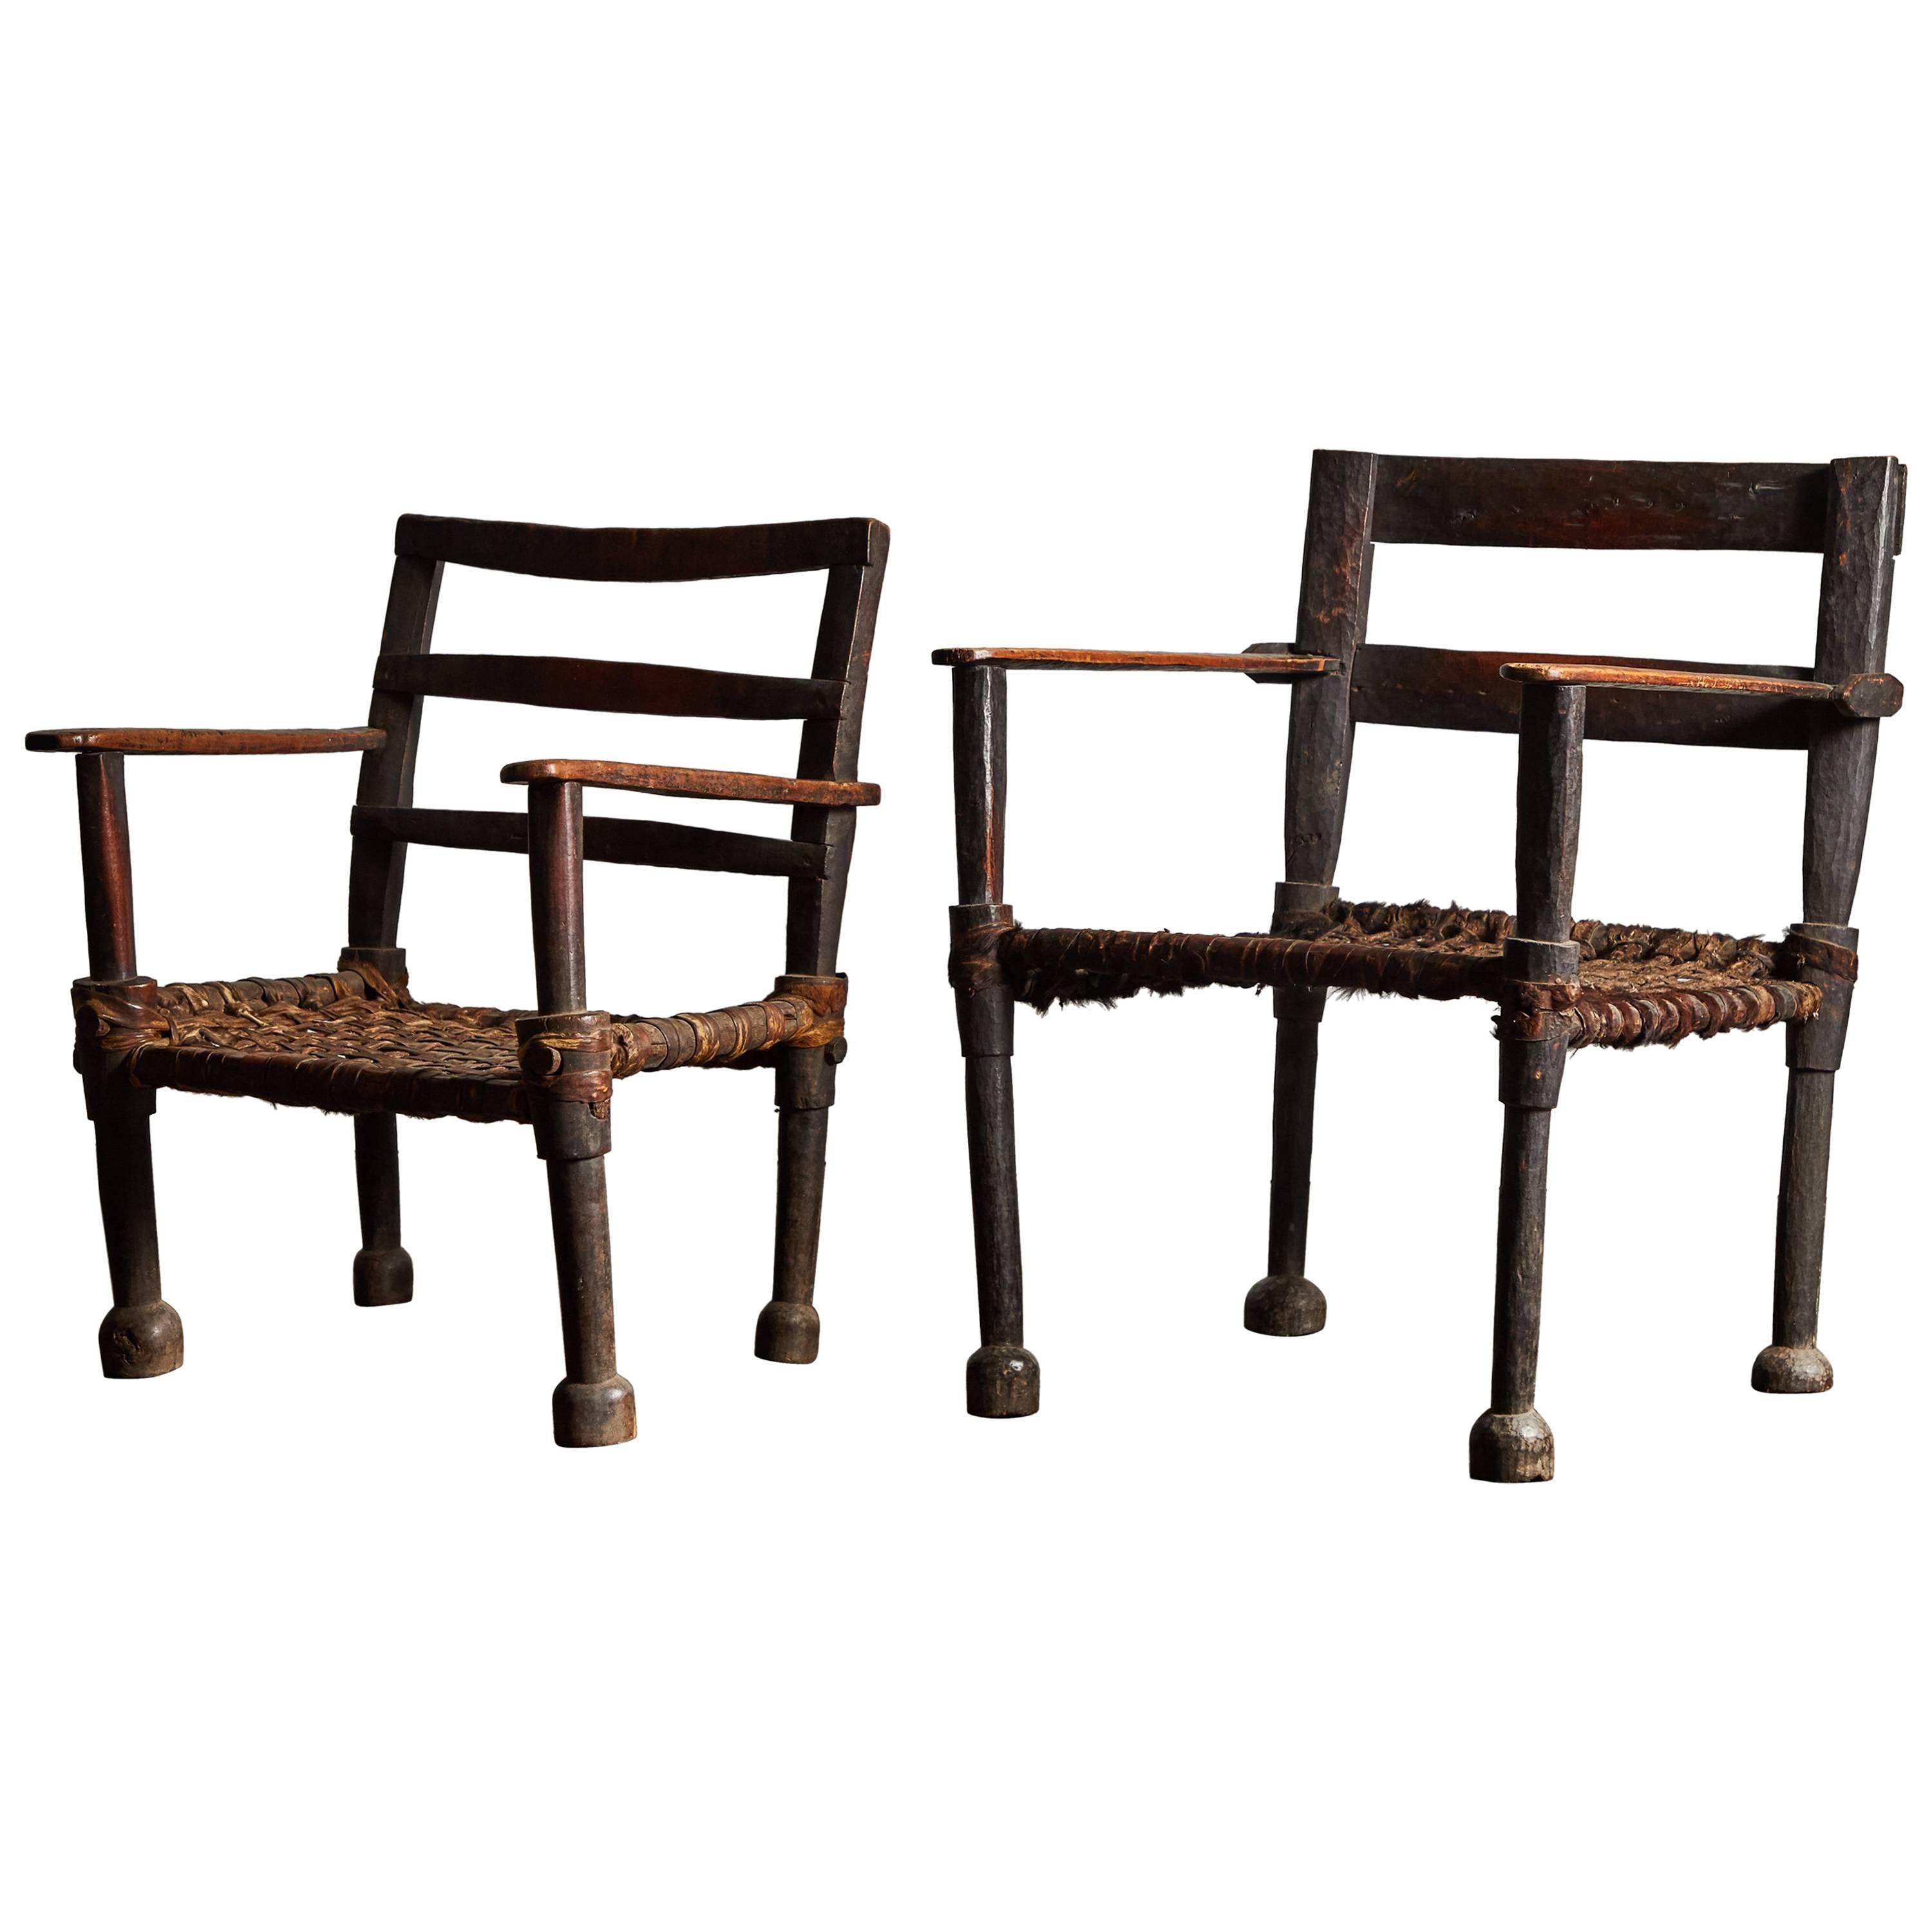 Pair of Ethiopian Chairs